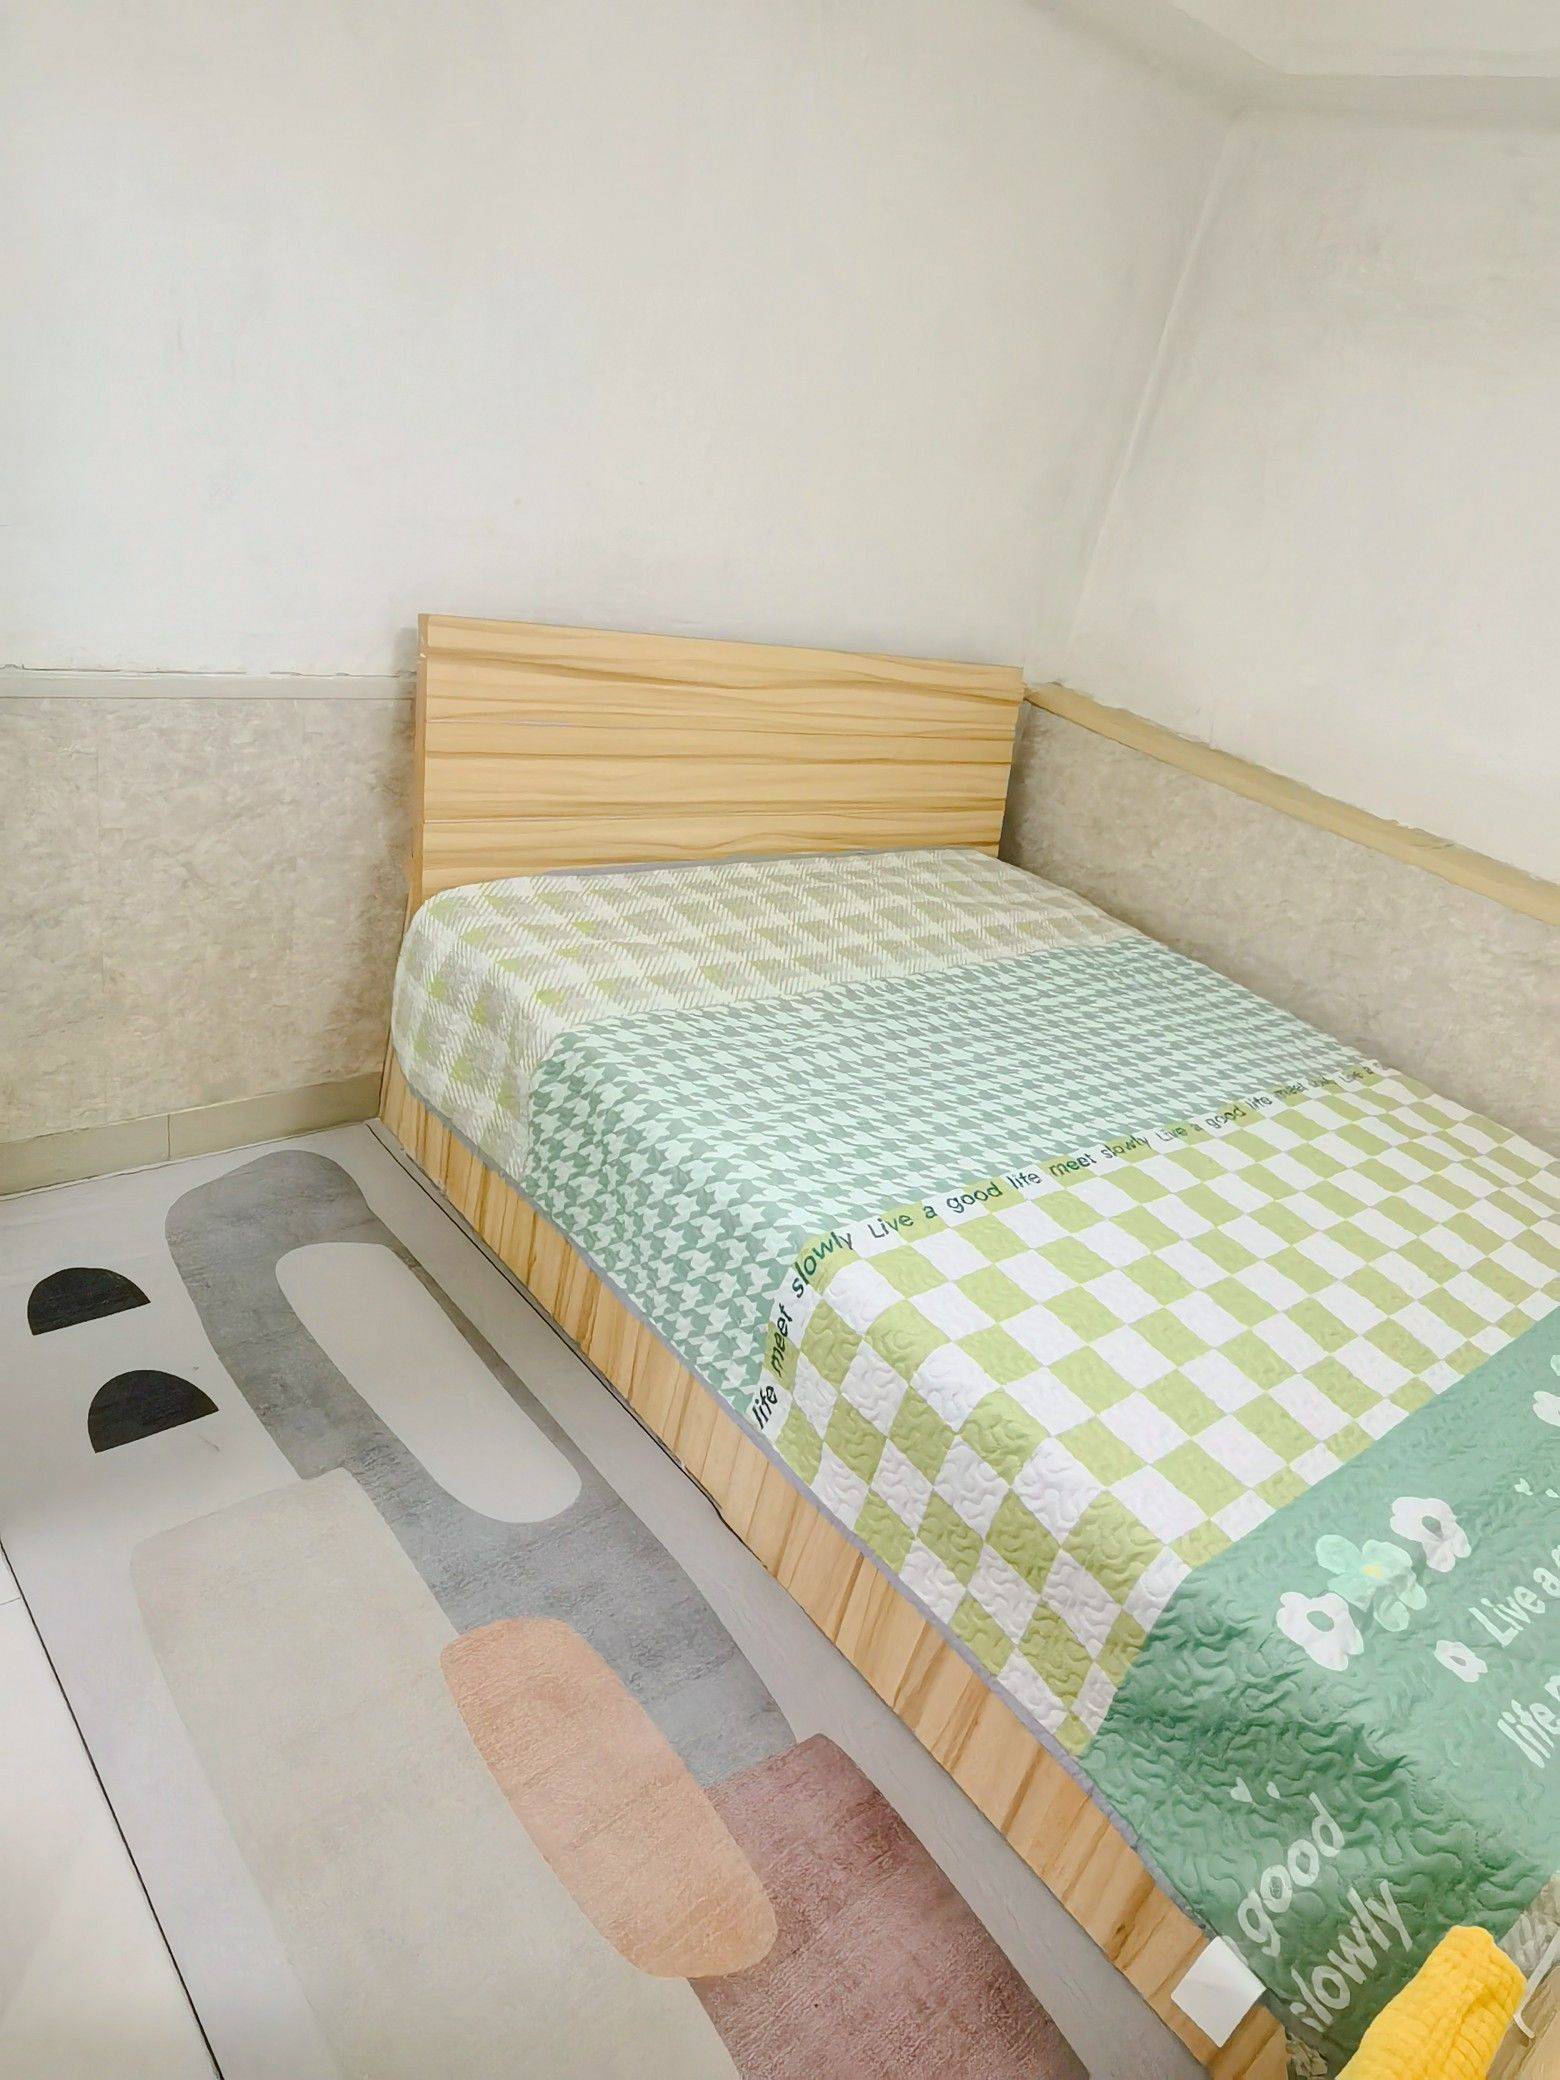 Qingdao-Shinan-Cozy Home,Clean&Comfy,No Gender Limit,Hustle & Bustle